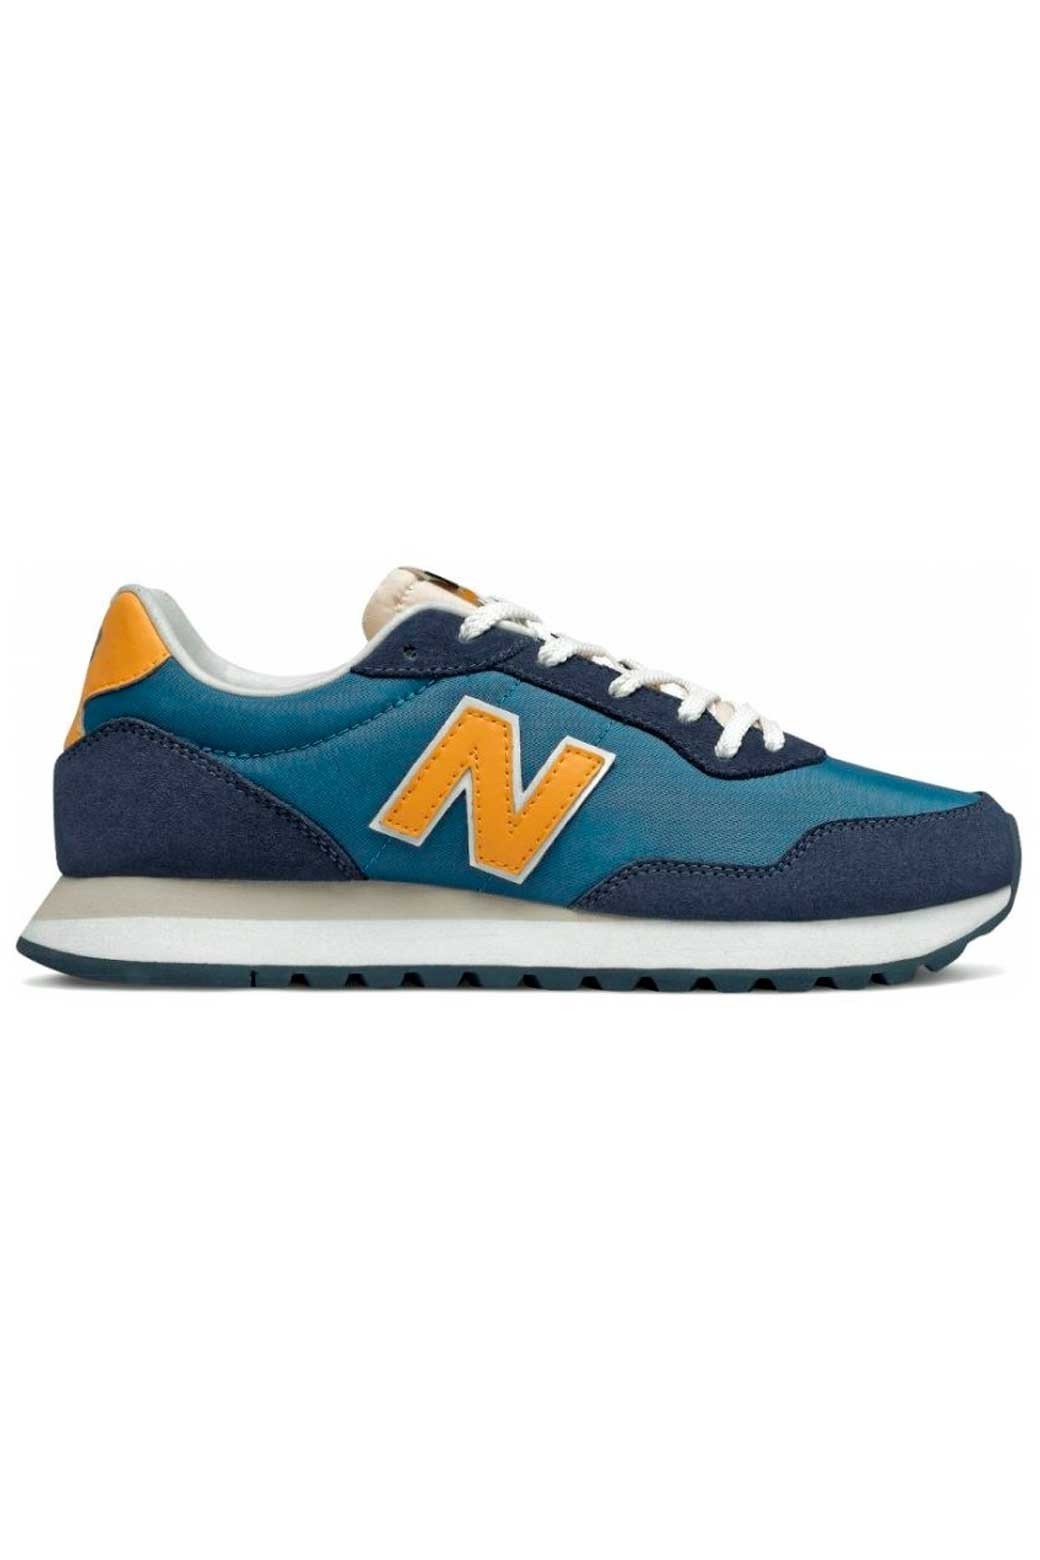 New Balance - Zapatillas para hombre Azul y amarillo - ML527 CCC